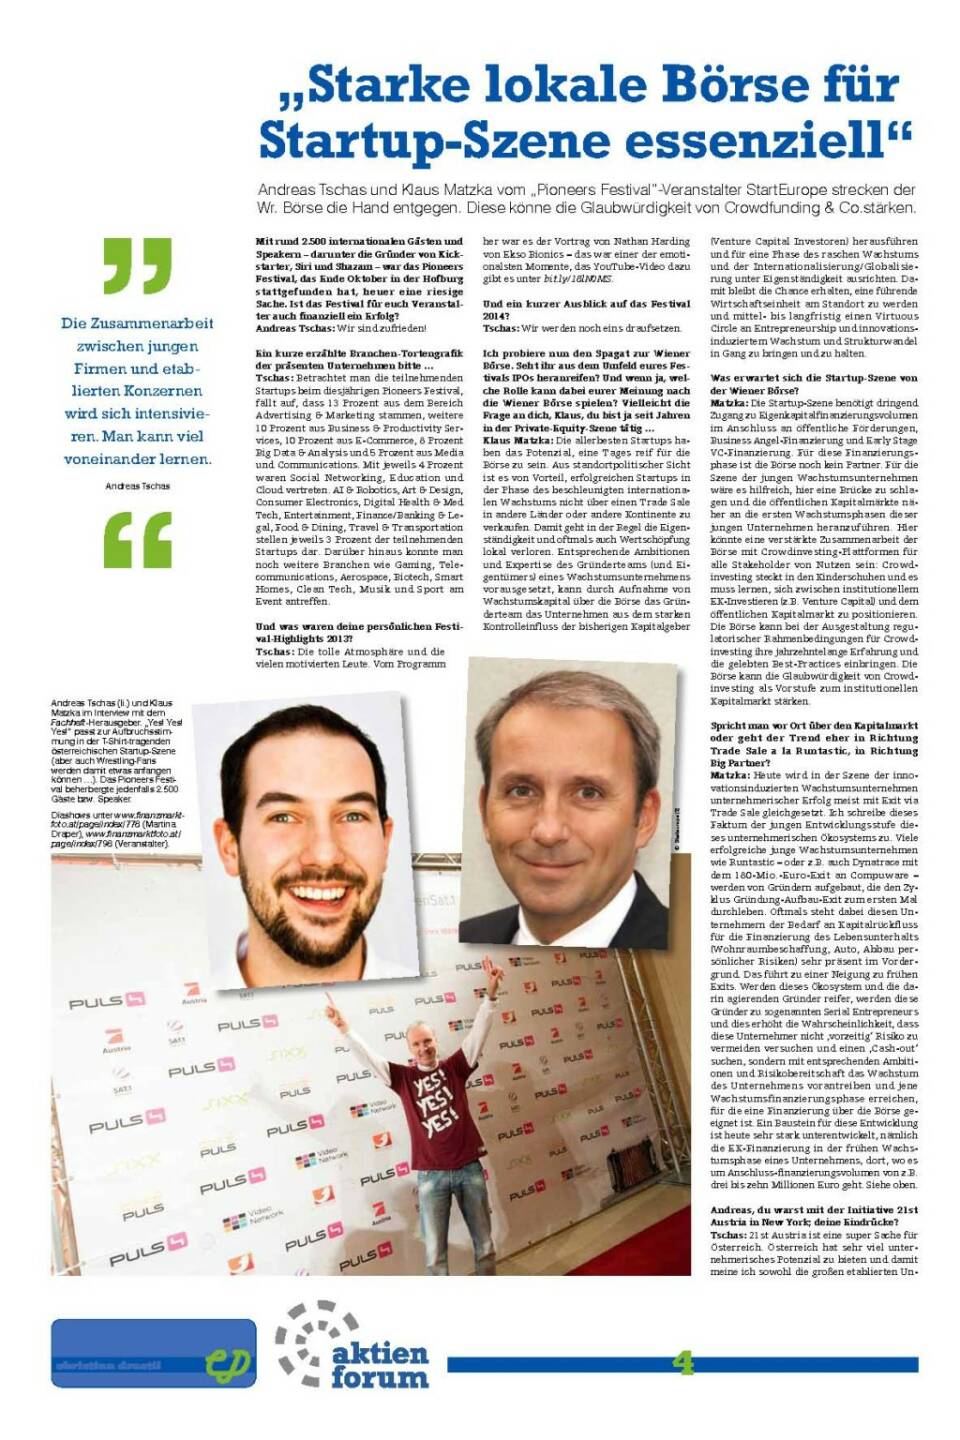 Fachheft 15 Pioniere & Startups, Seite 4: Teil 1 Interview Andreas Tschas, Klaus Matzka